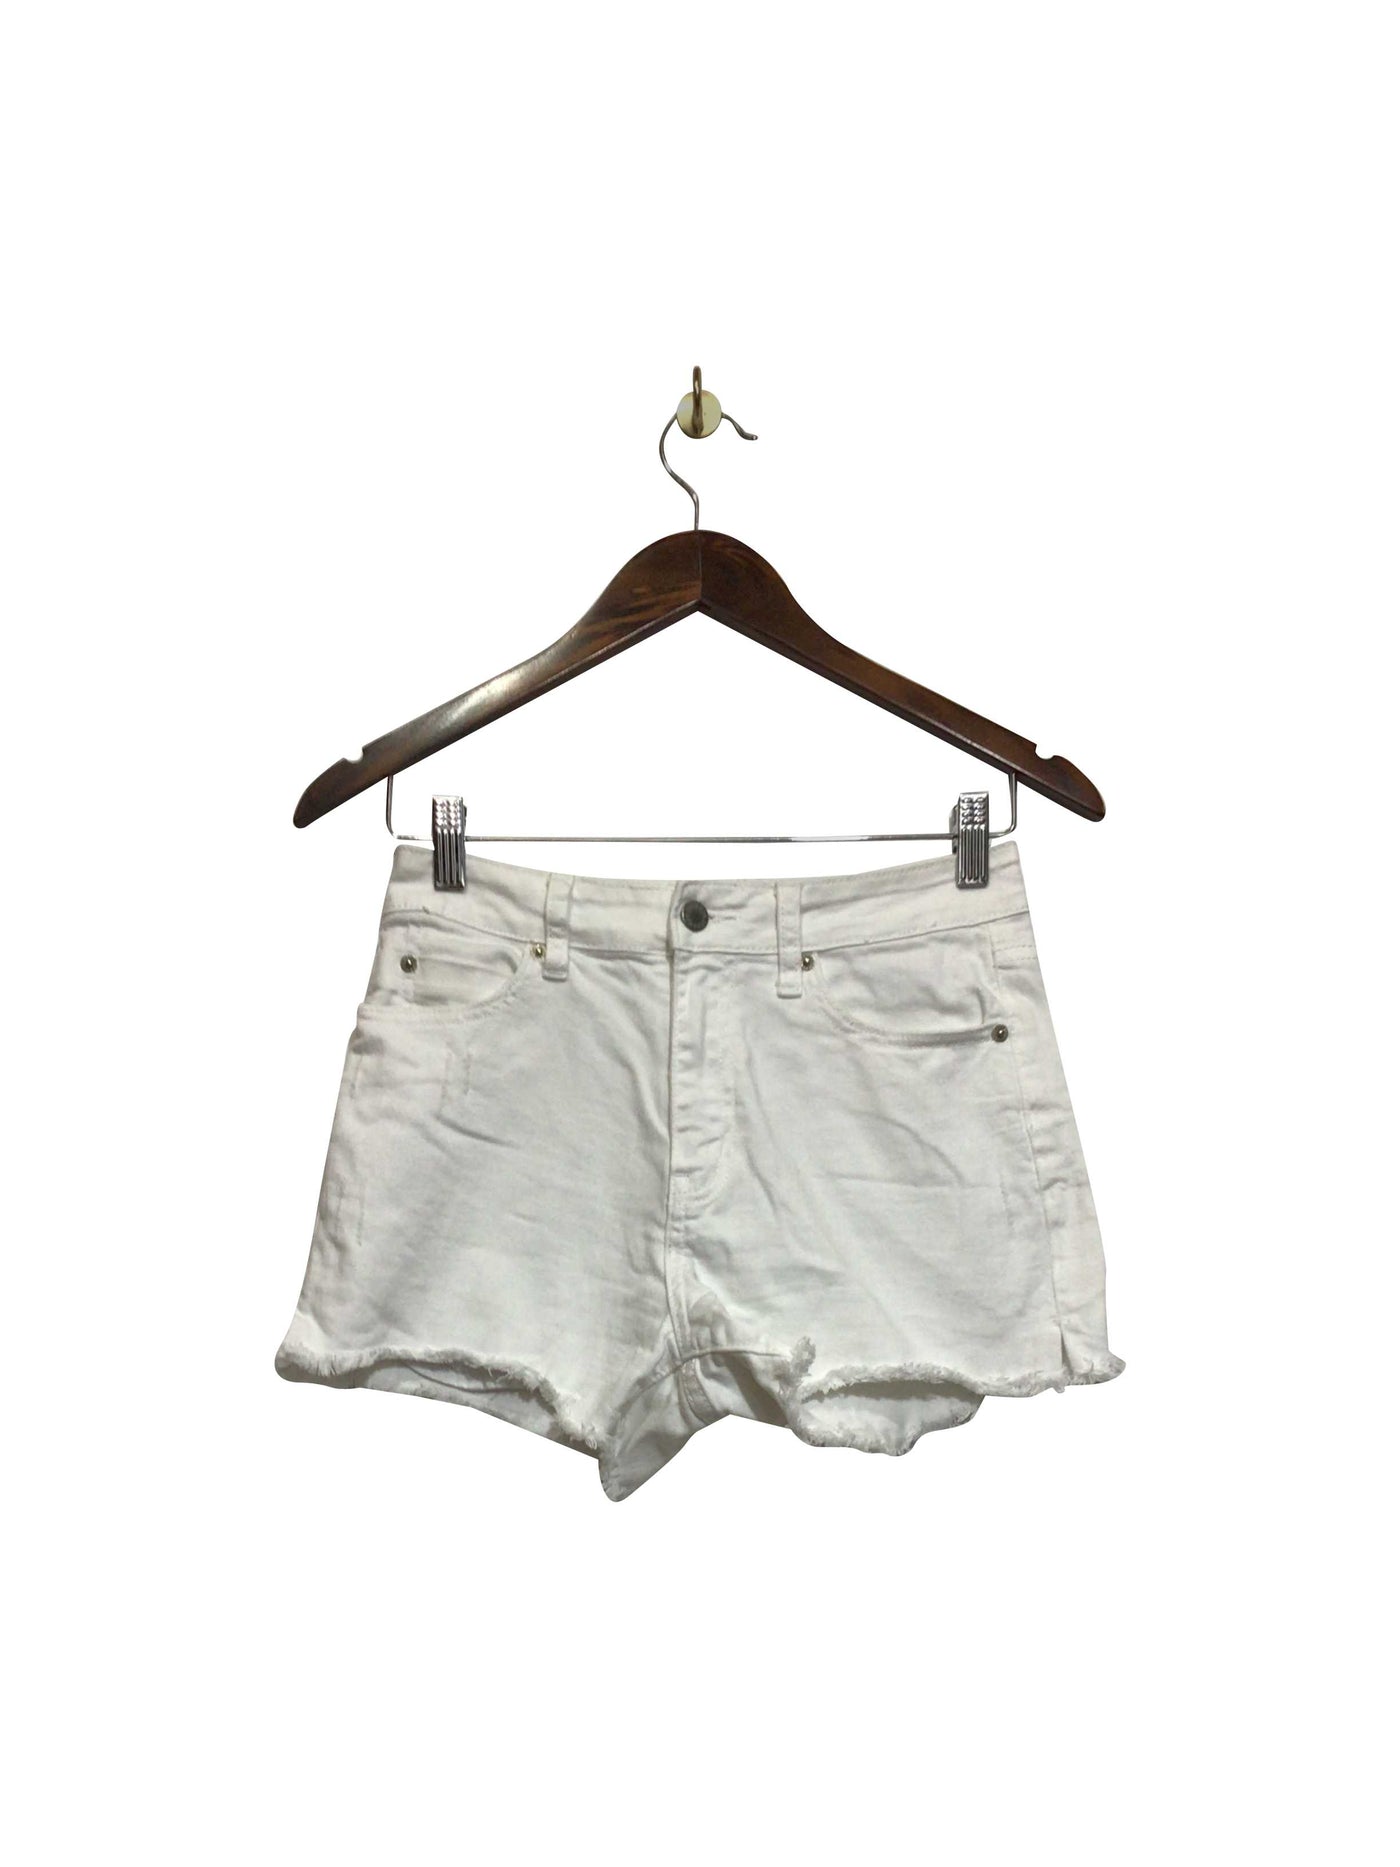 JUST USA Regular fit Jean Shorts in White  -  XS  11.34 Koop